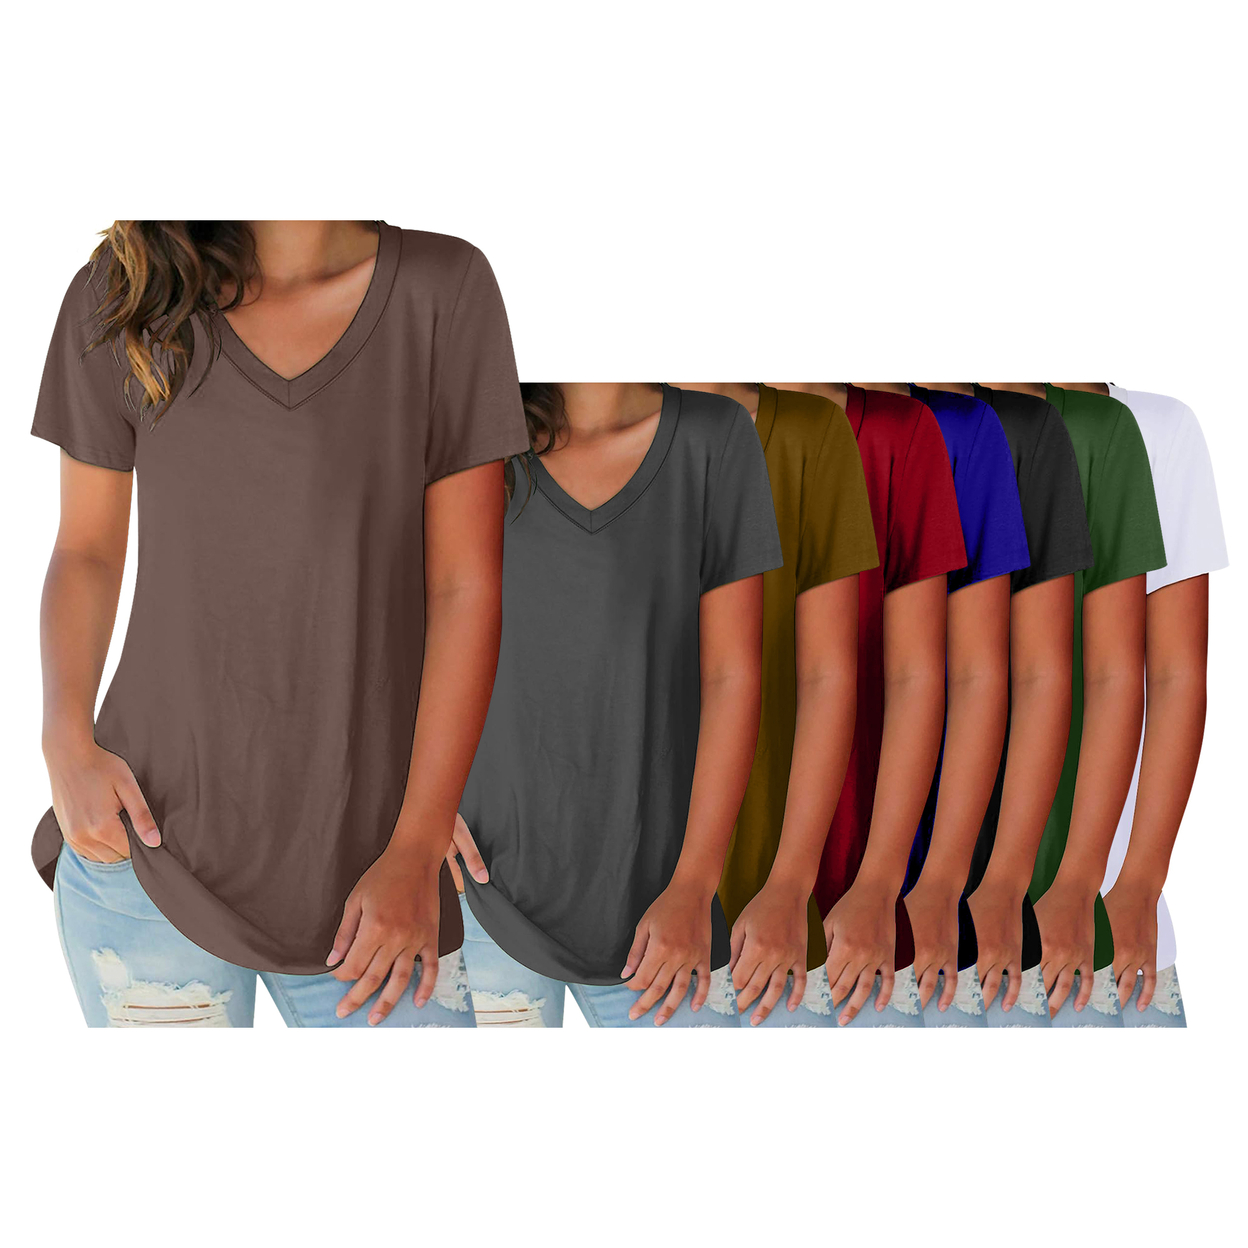 3-Pack: Women's Ultra Soft Smooth Cotton Blend Basic V-Neck Short Sleeve Shirts - Black, Navy, Green, Medium